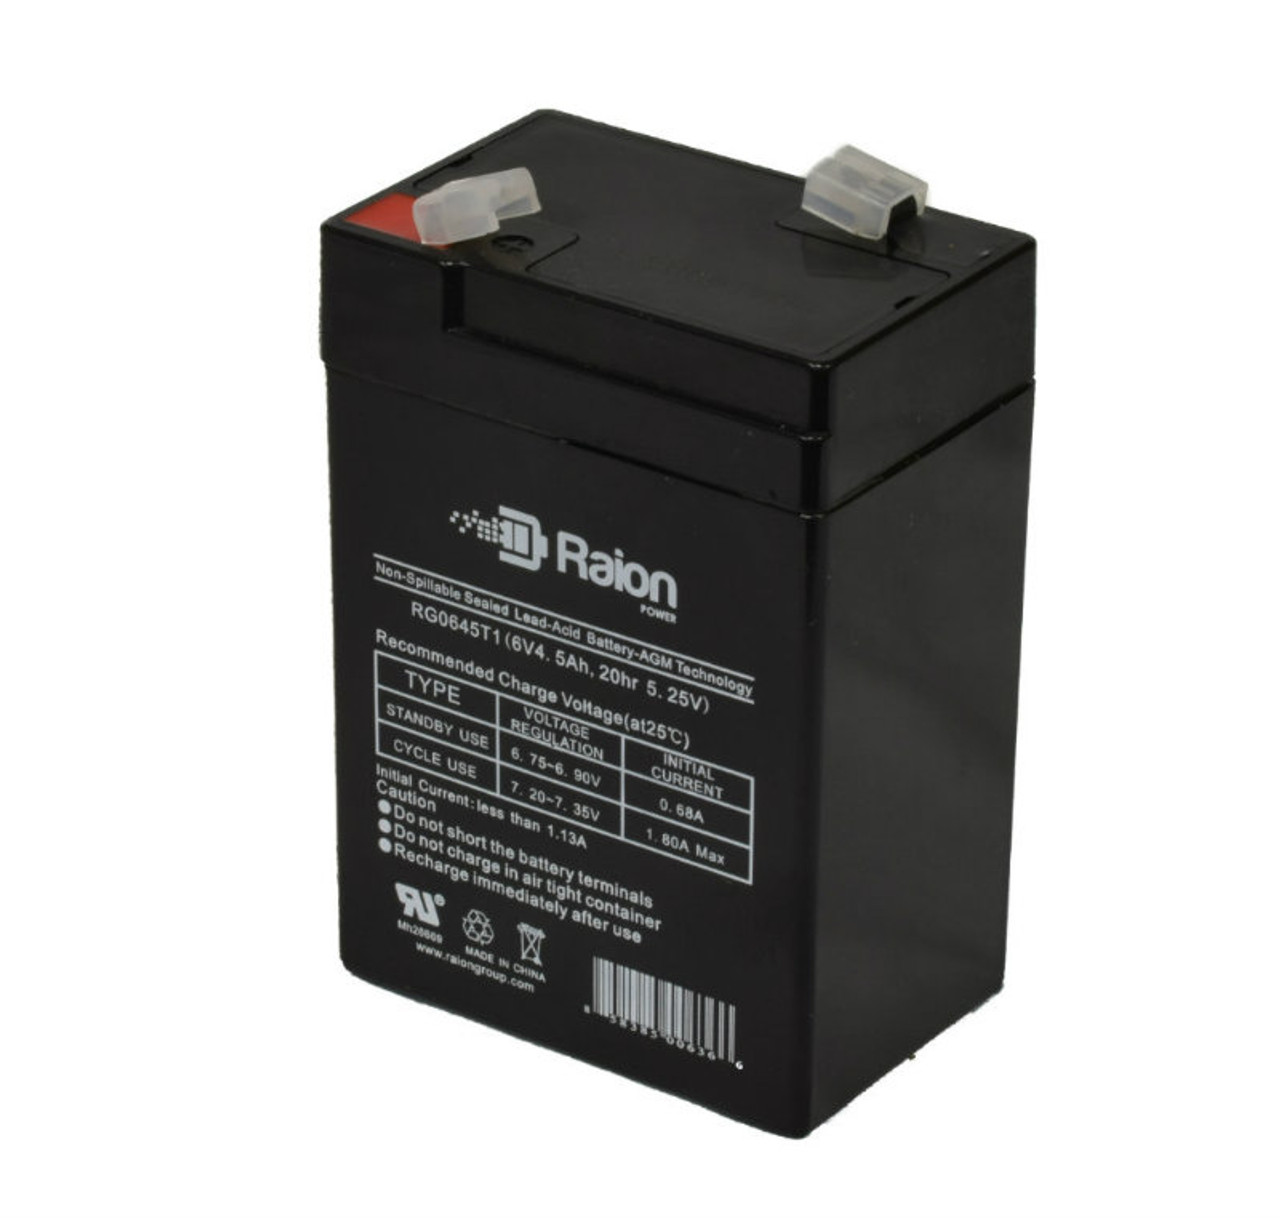 Raion Power RG0645T1 6V 4.5Ah Replacement Battery Cartridge for Sentry-Lite 640